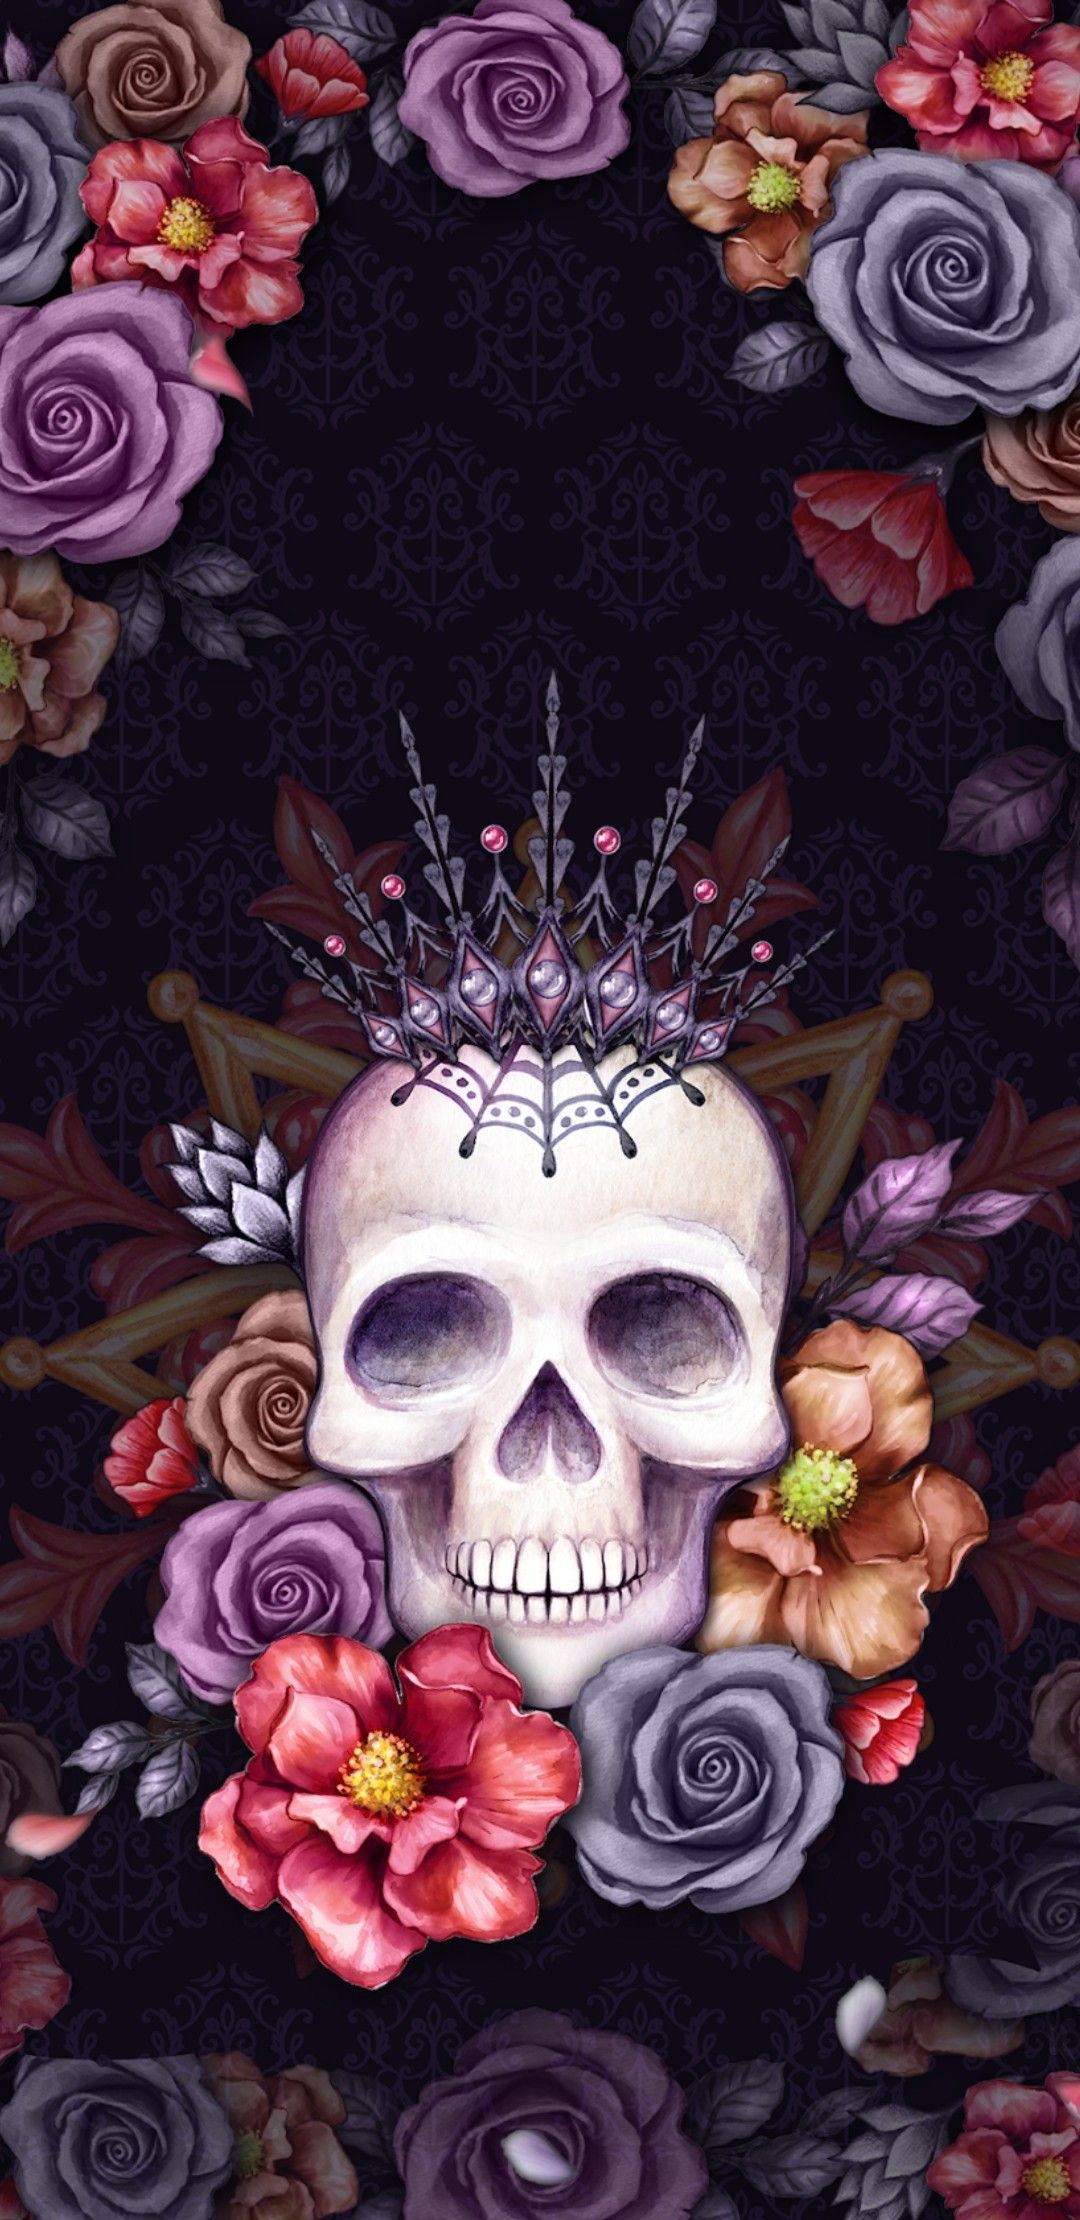 Wallpaper. By Artist Unknown. Sugar skull wallpaper, Sugar skull artwork, Skull wallpaper iphone